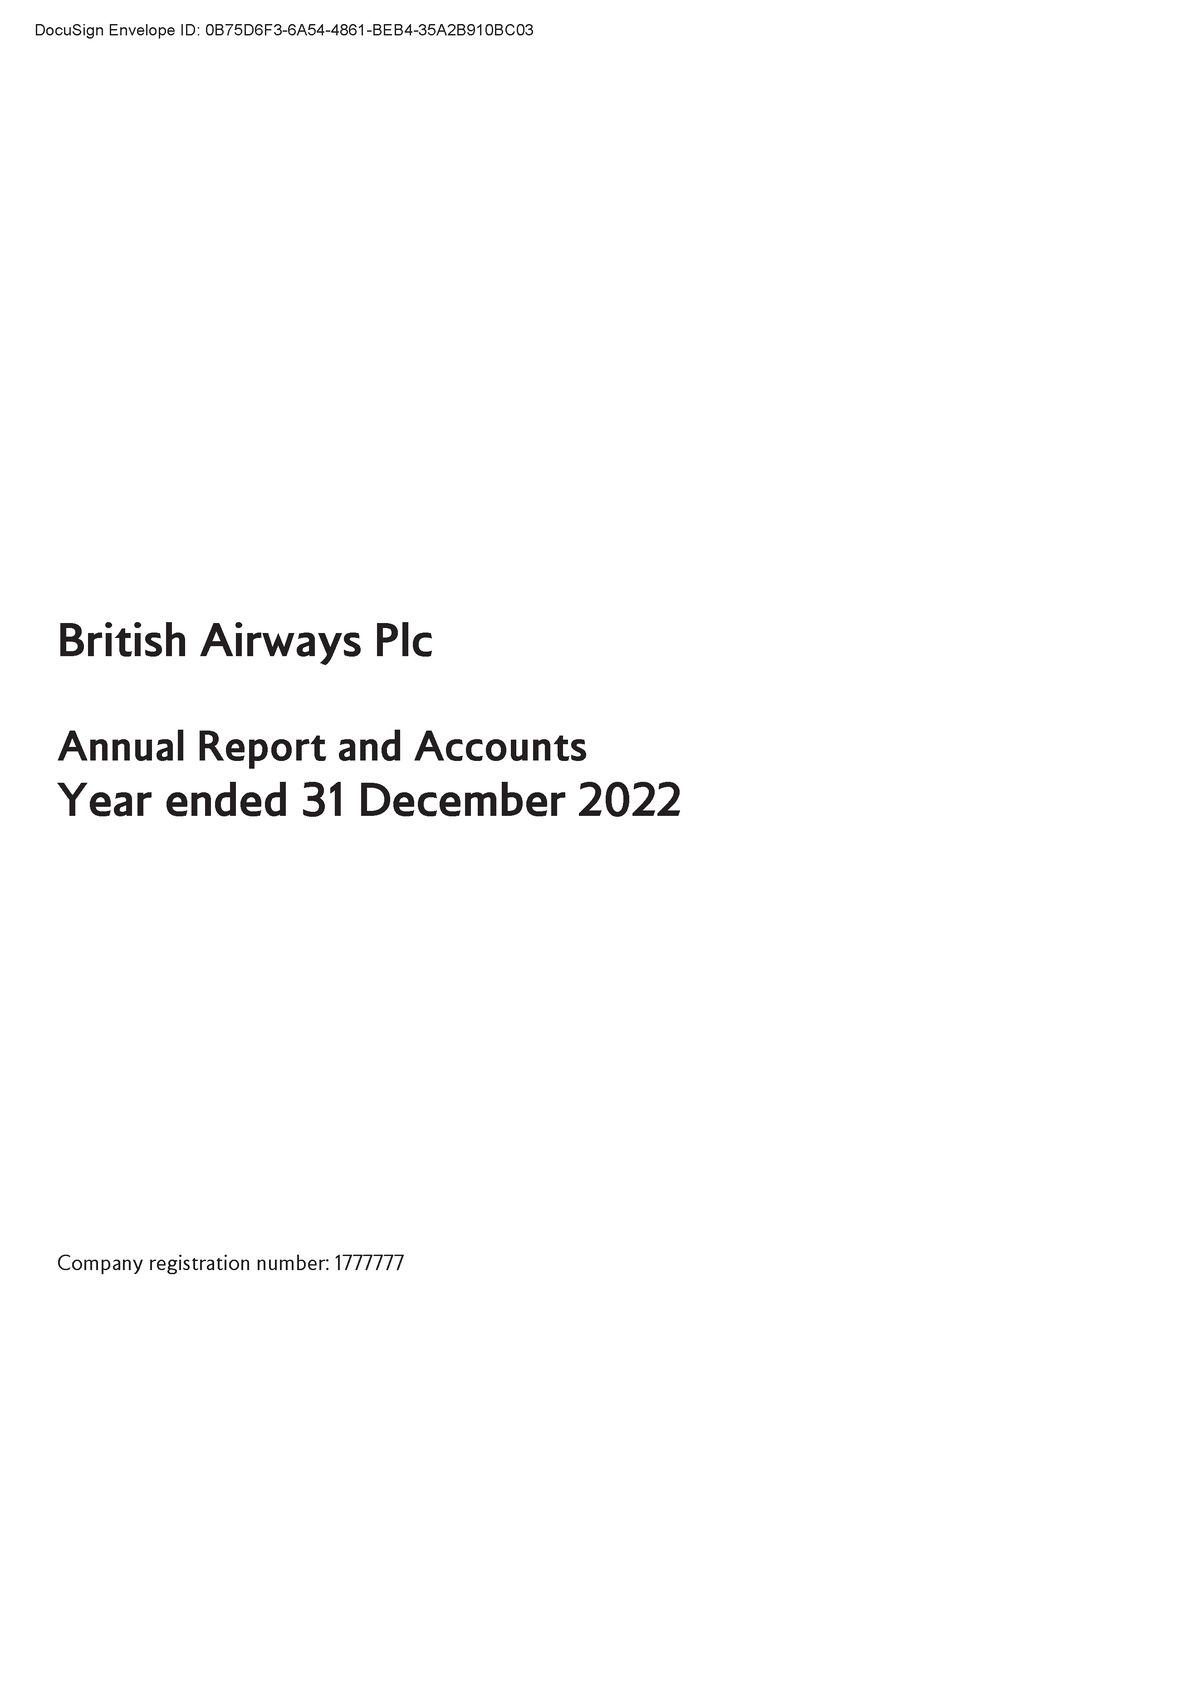 British airways annual report and accounts 2022 British Airways Plc